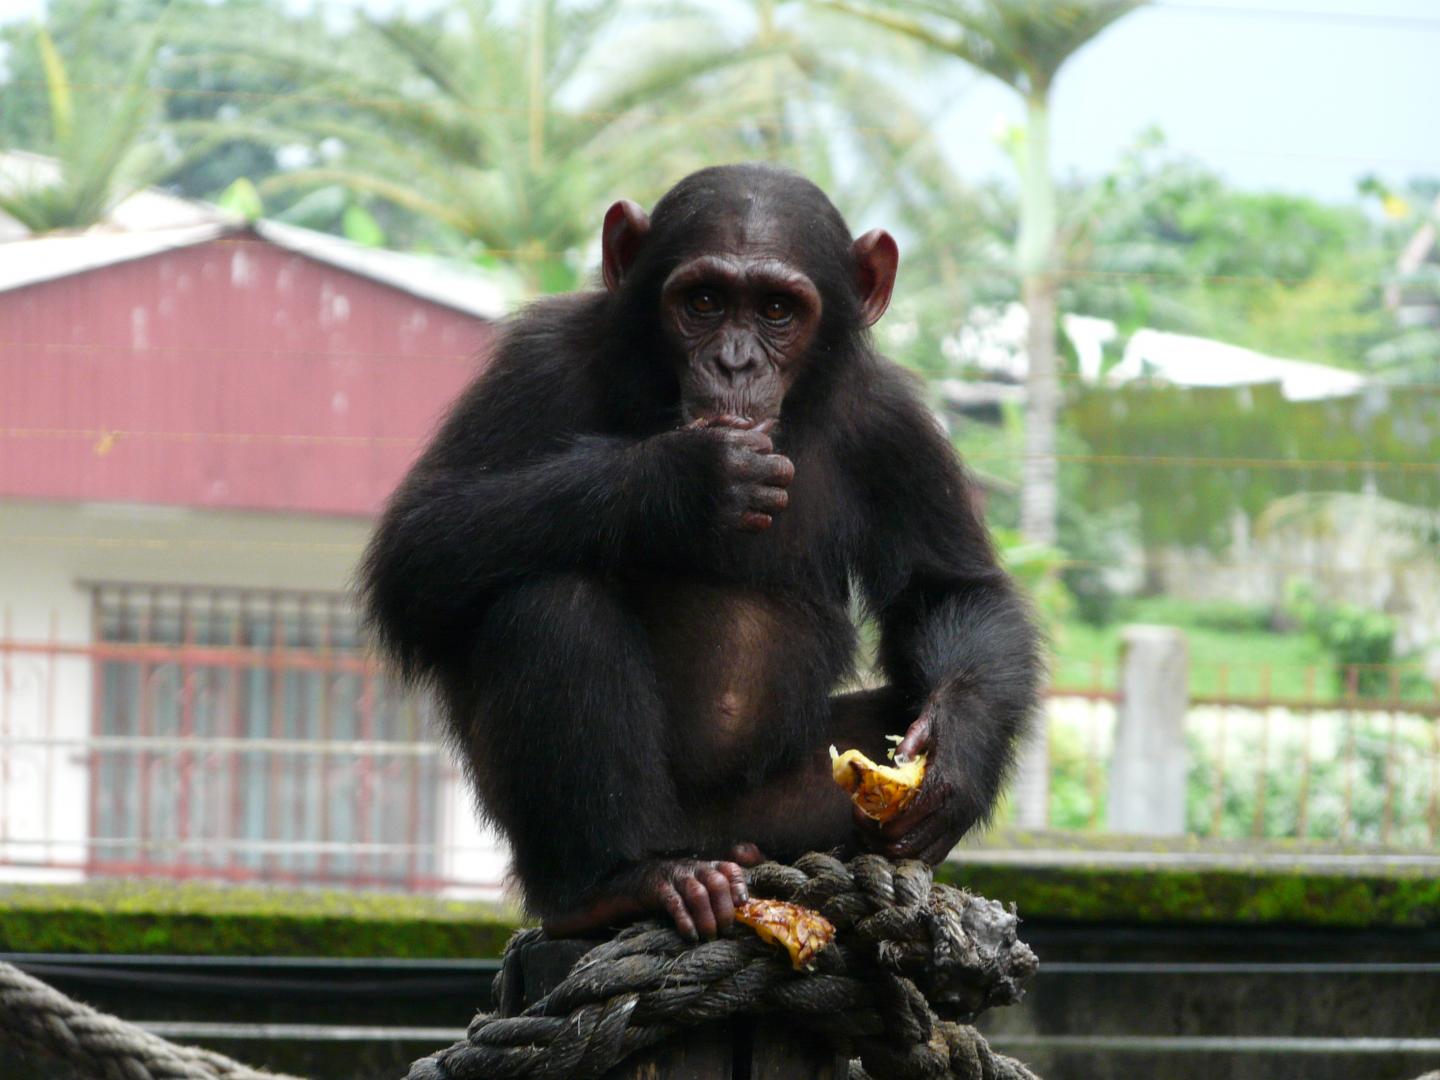 Nigeria-Cameroon Chimpanzee